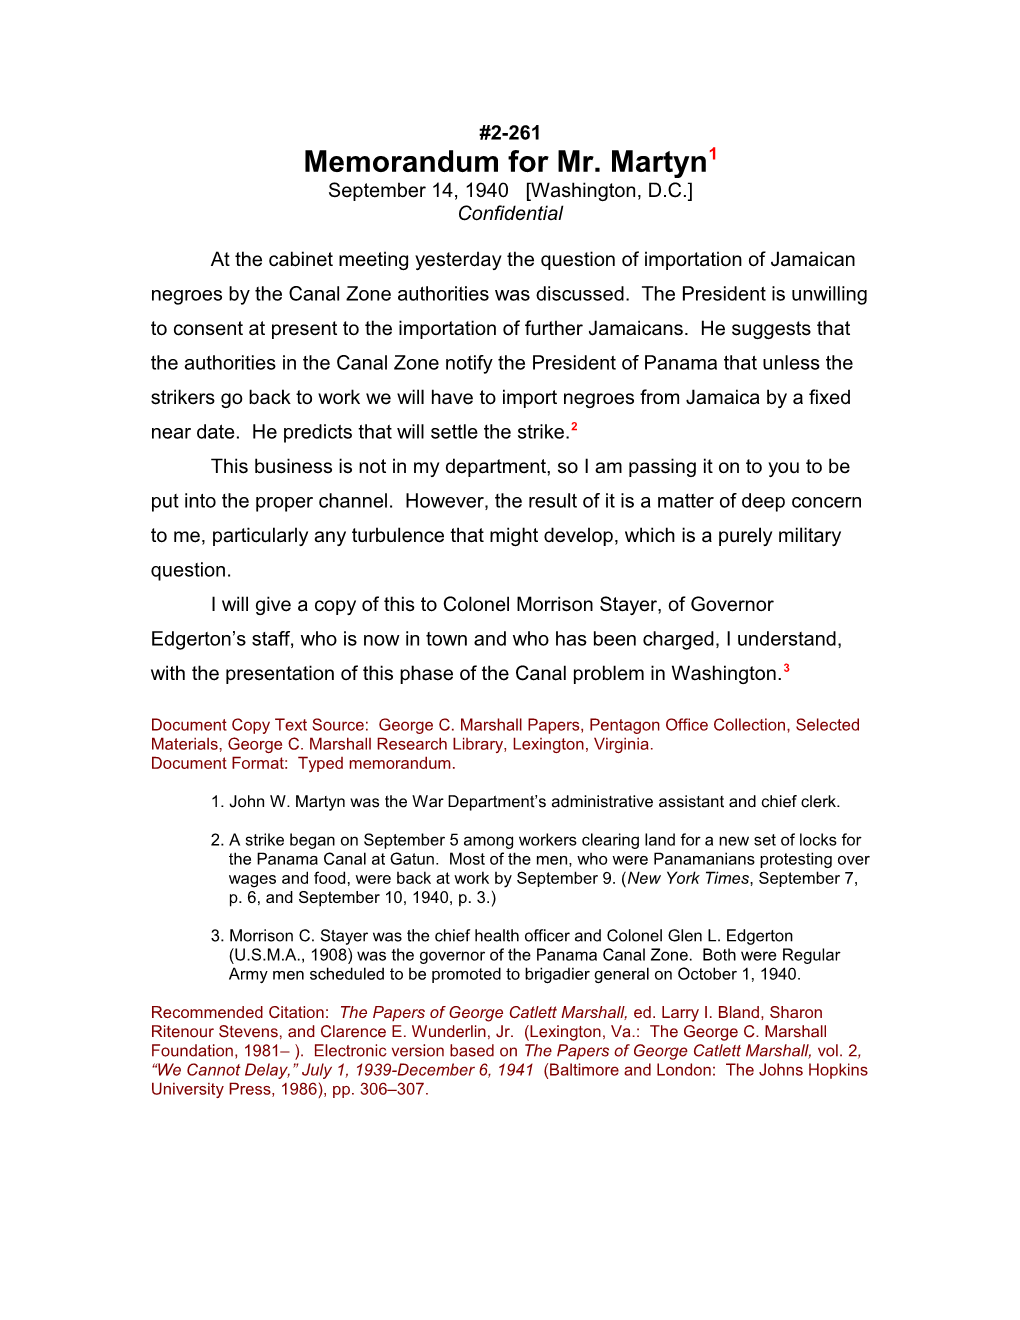 Memorandum for Mr. Martyn1